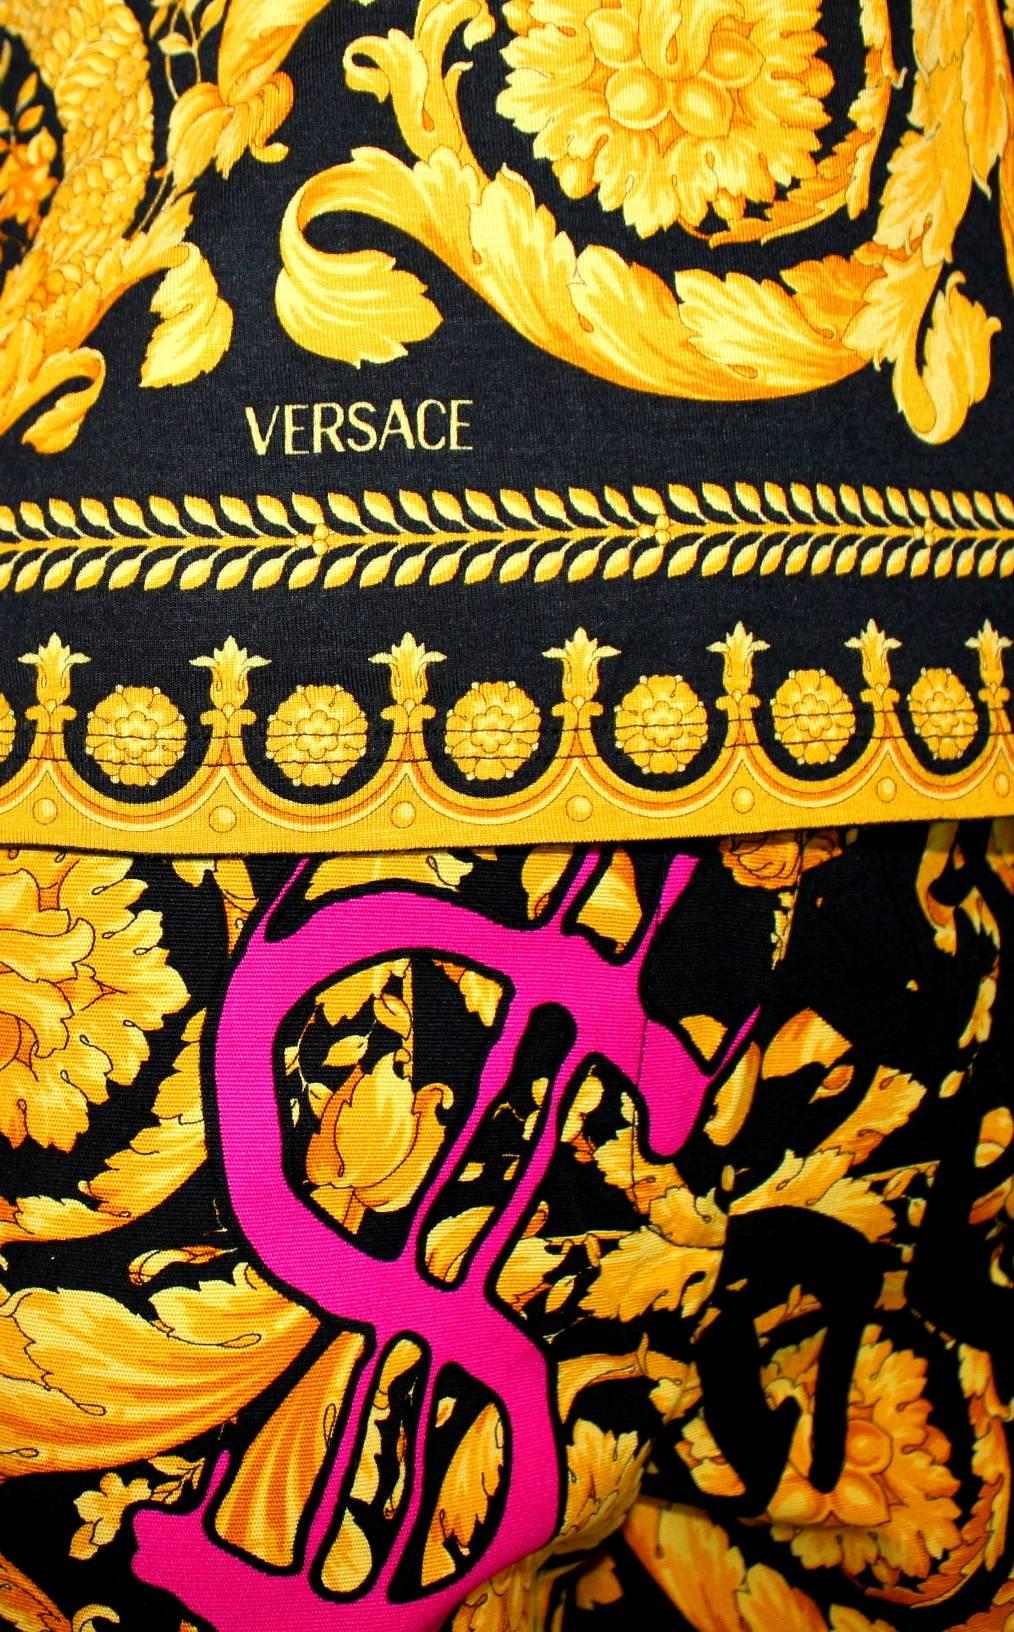 Versace Colorful Signatur Medusa Print Graffiti Hose Racer Top Ensemble Anzug (Braun) im Angebot